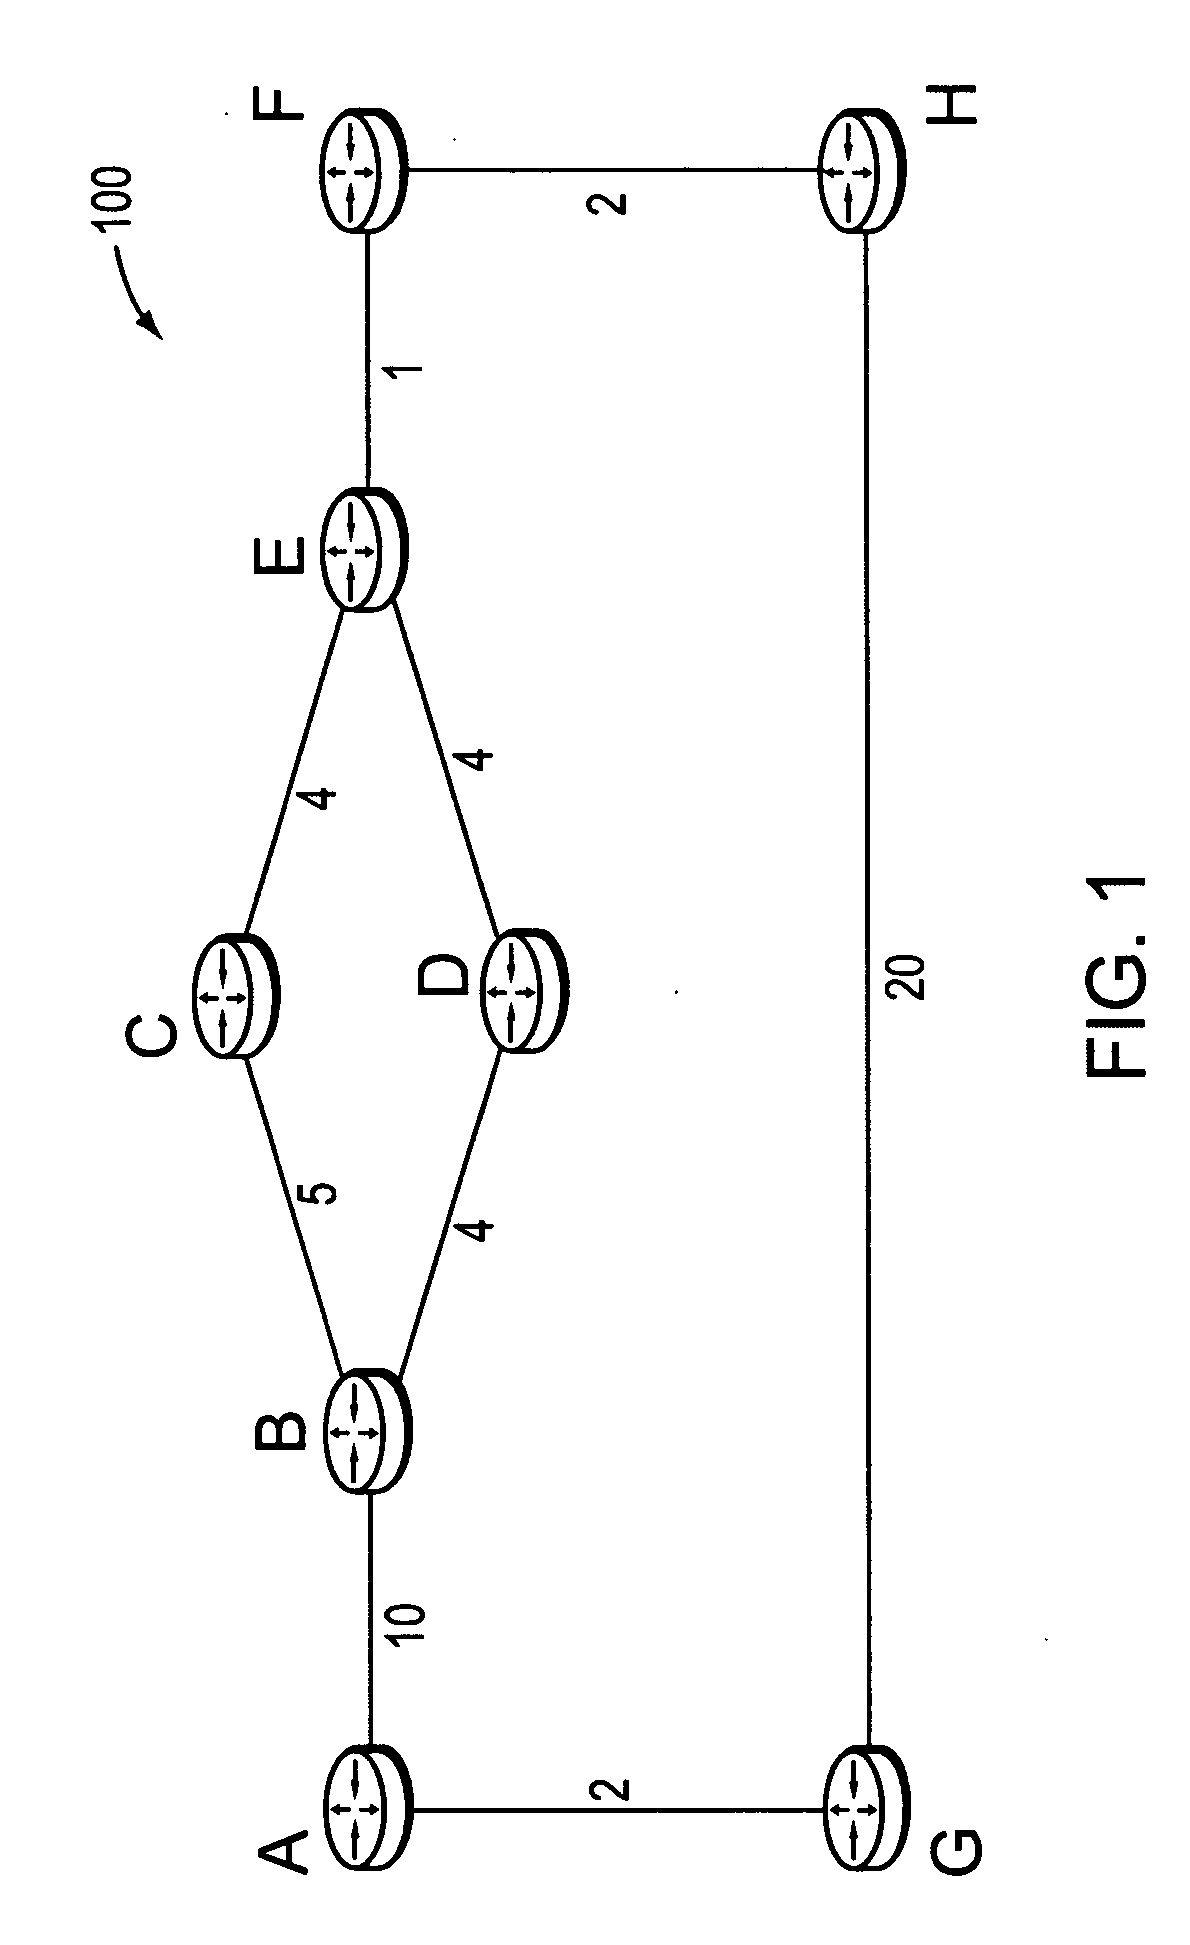 Efficient constrained shortest path first optimization technique